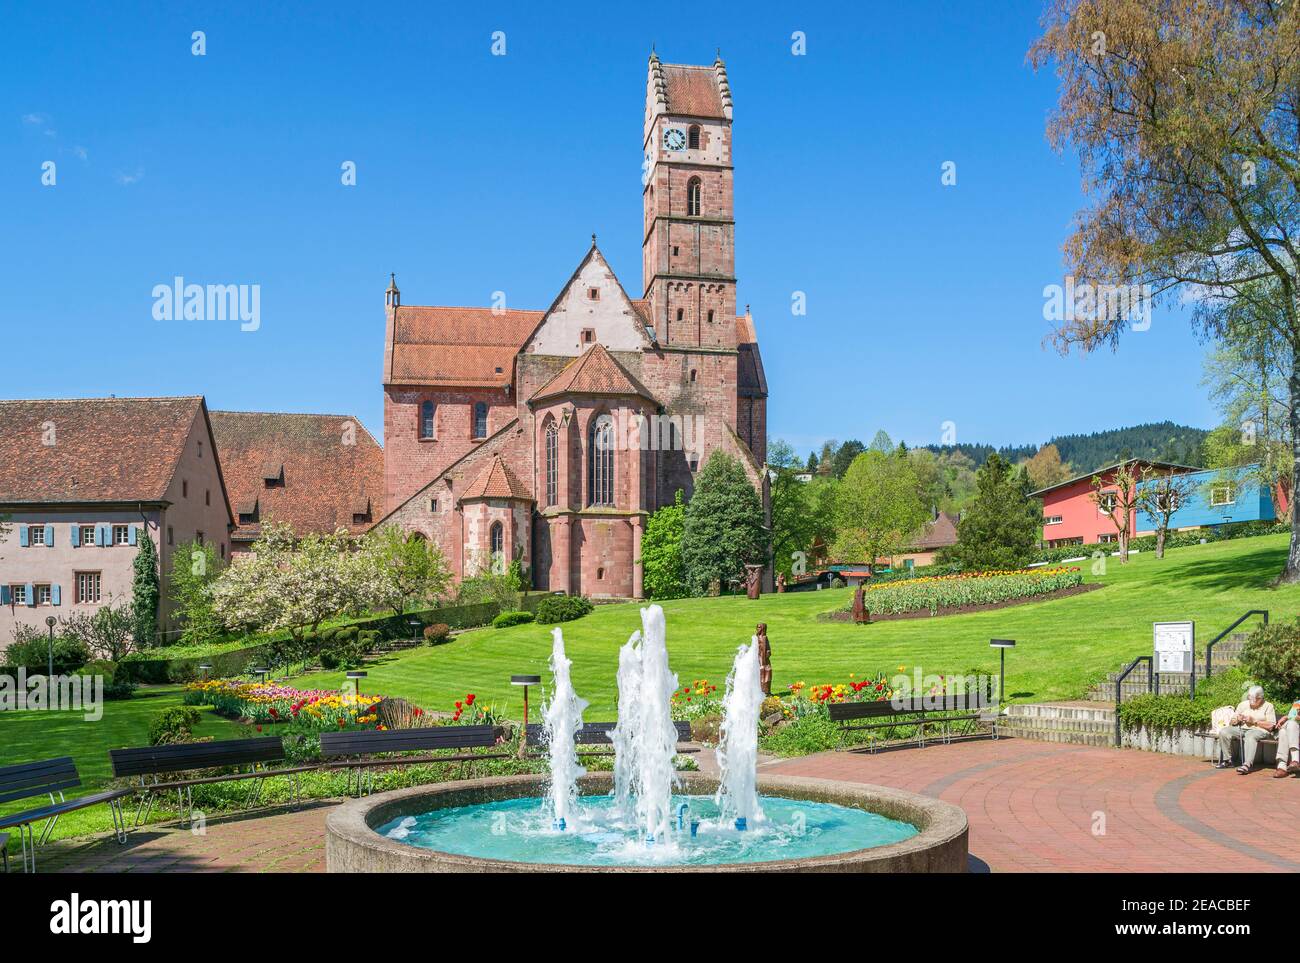 Germania, Baden-Württemberg, Alpirsbach, Alpirsbach chiesa monastero, romanico, 11 ° secolo, ex monastero benedettino. Foto Stock